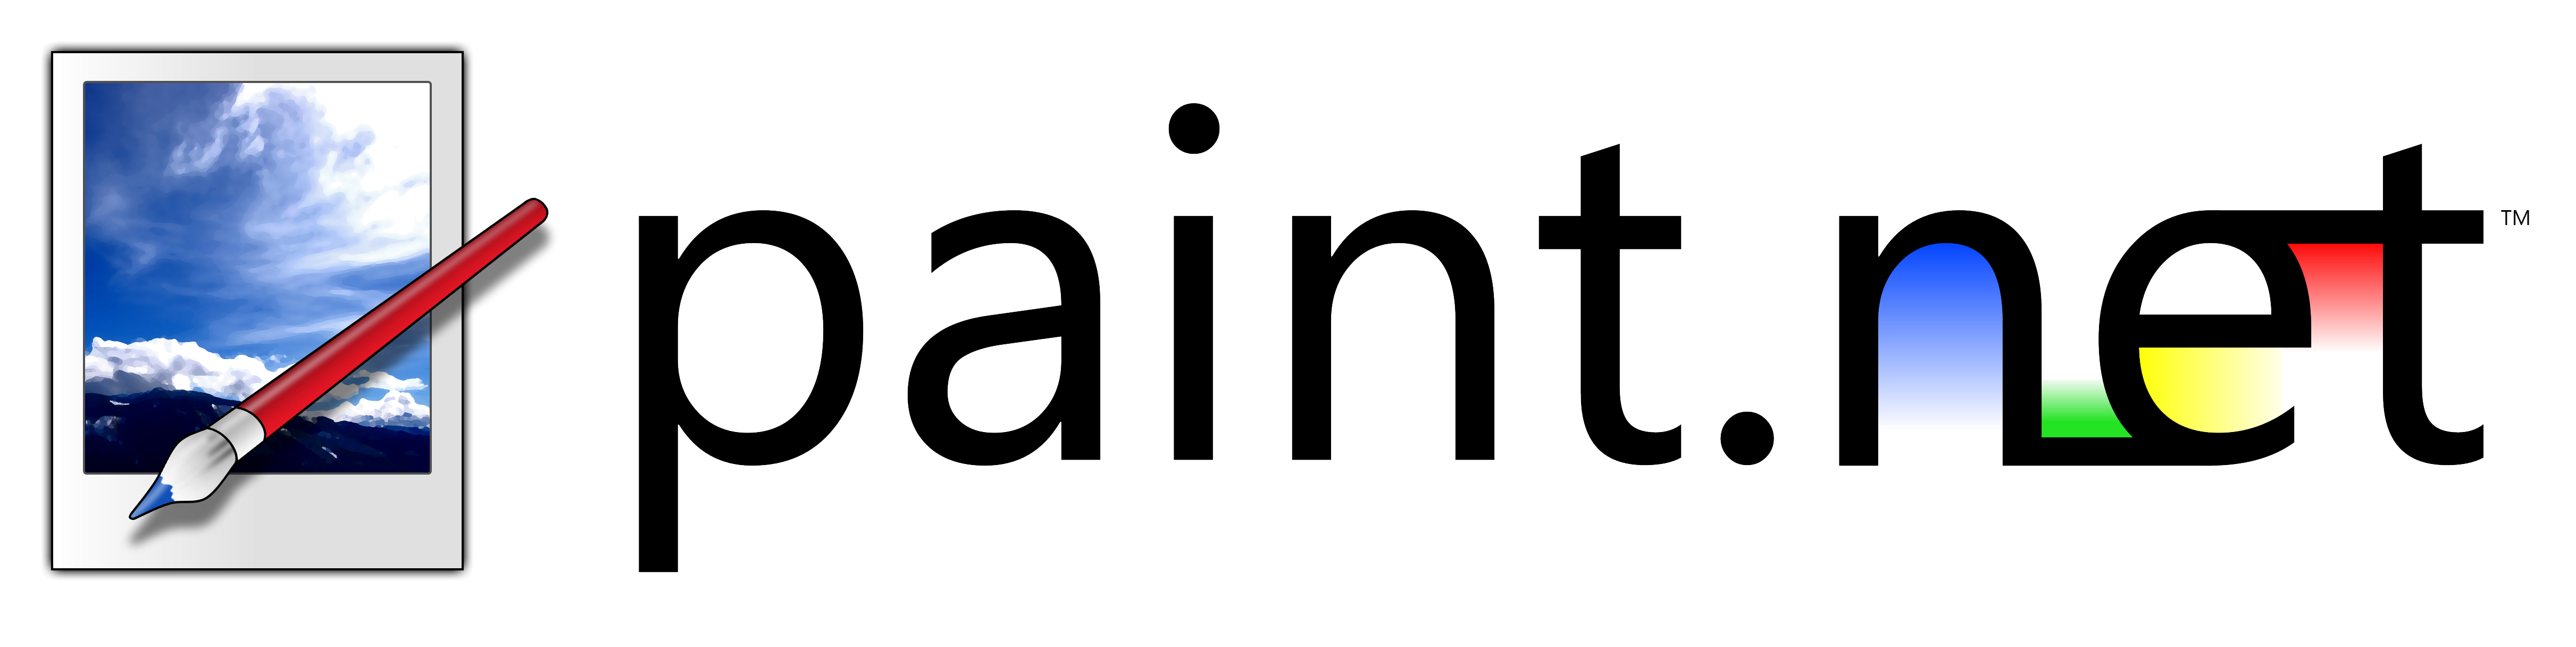 paint.net free